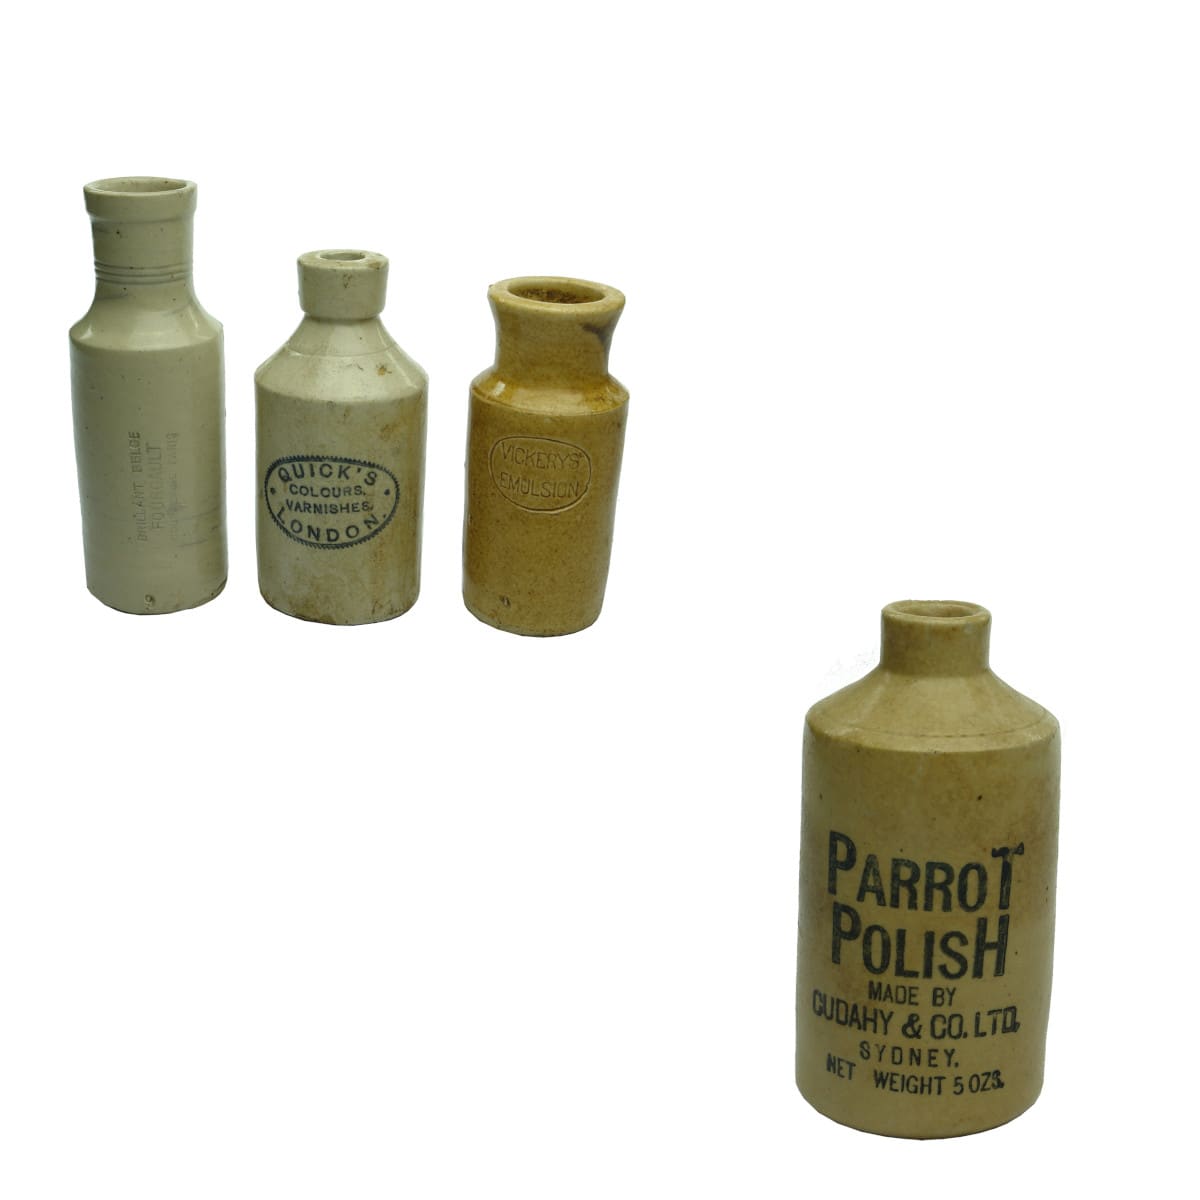 4 Jars. Forgault, Paris; Quick's, London; Vickerys Emulsion; Parrot Polish.